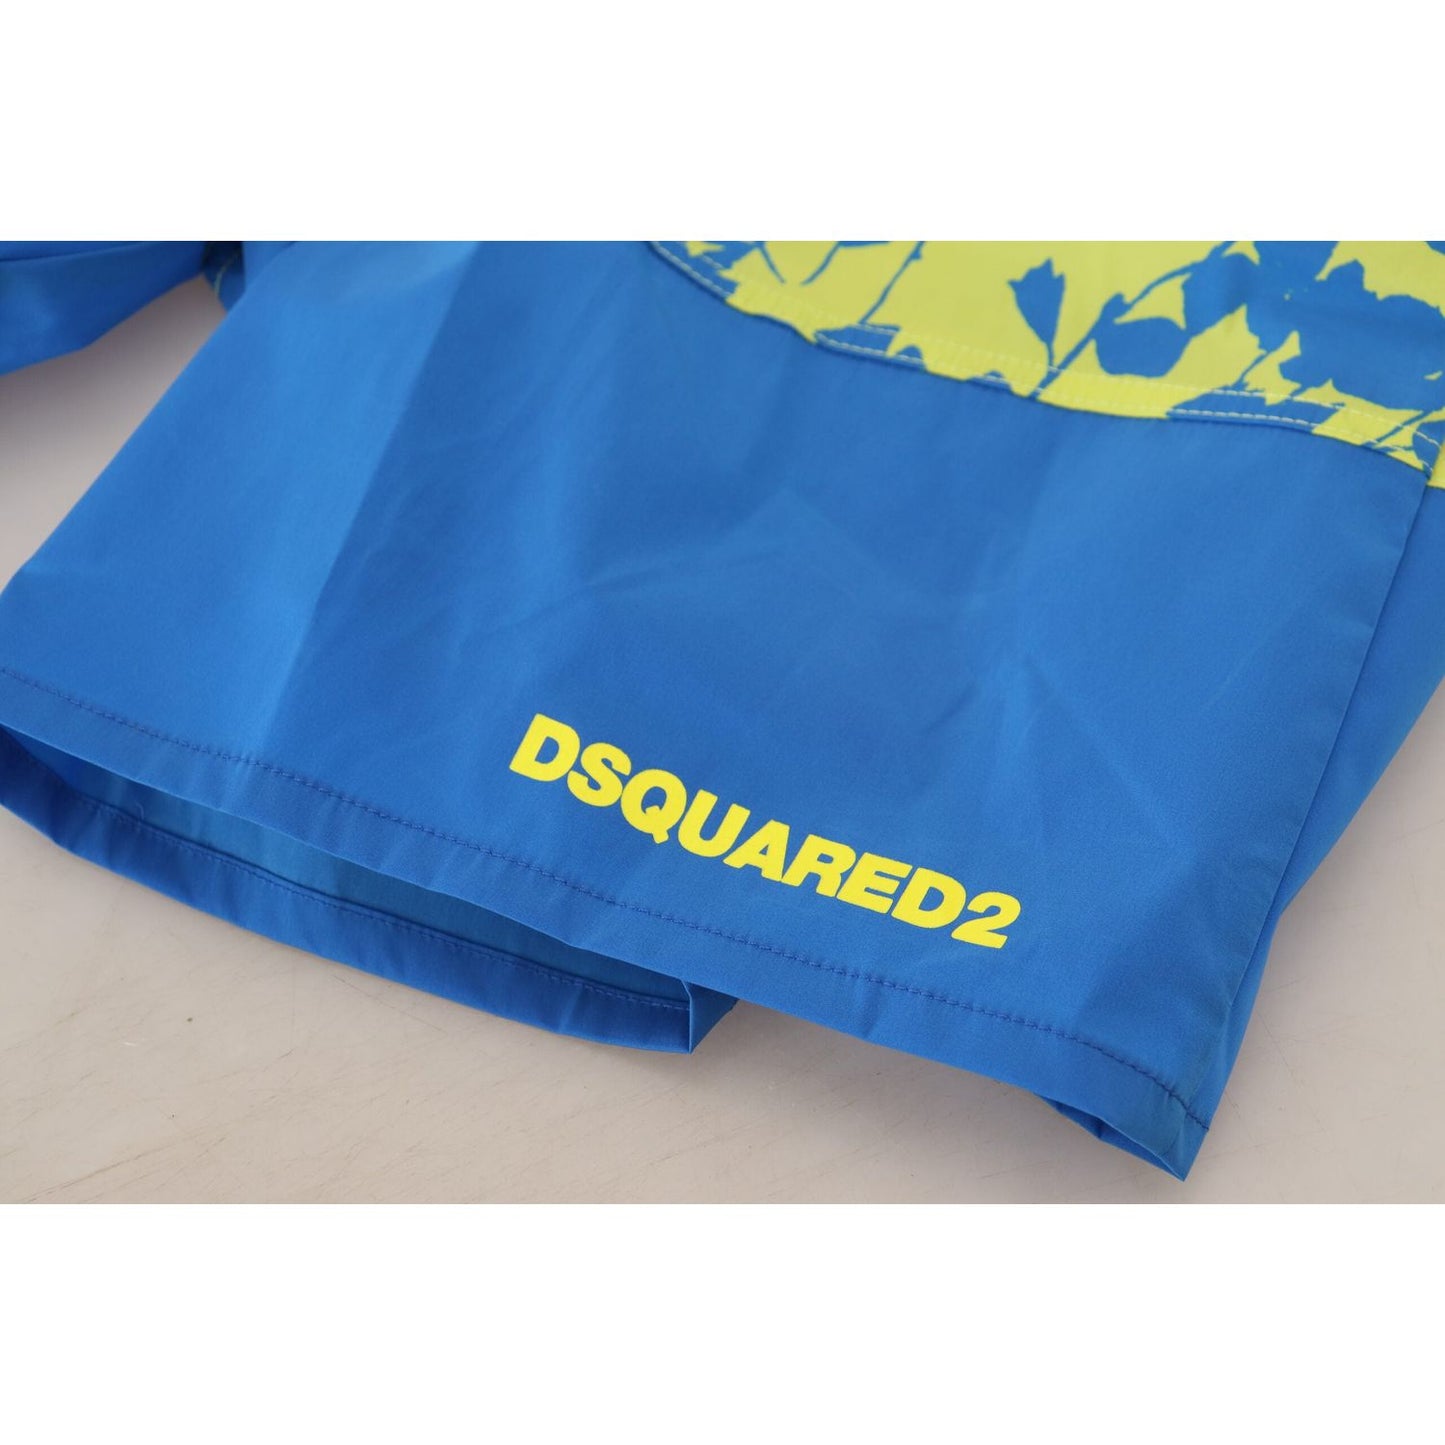 Dsquared² Exquisite Blue Green Swim Shorts Boxer blue-green-logo-print-men-beachwear-shorts-swimwear IMG_6009-scaled-49208663-1da.jpg